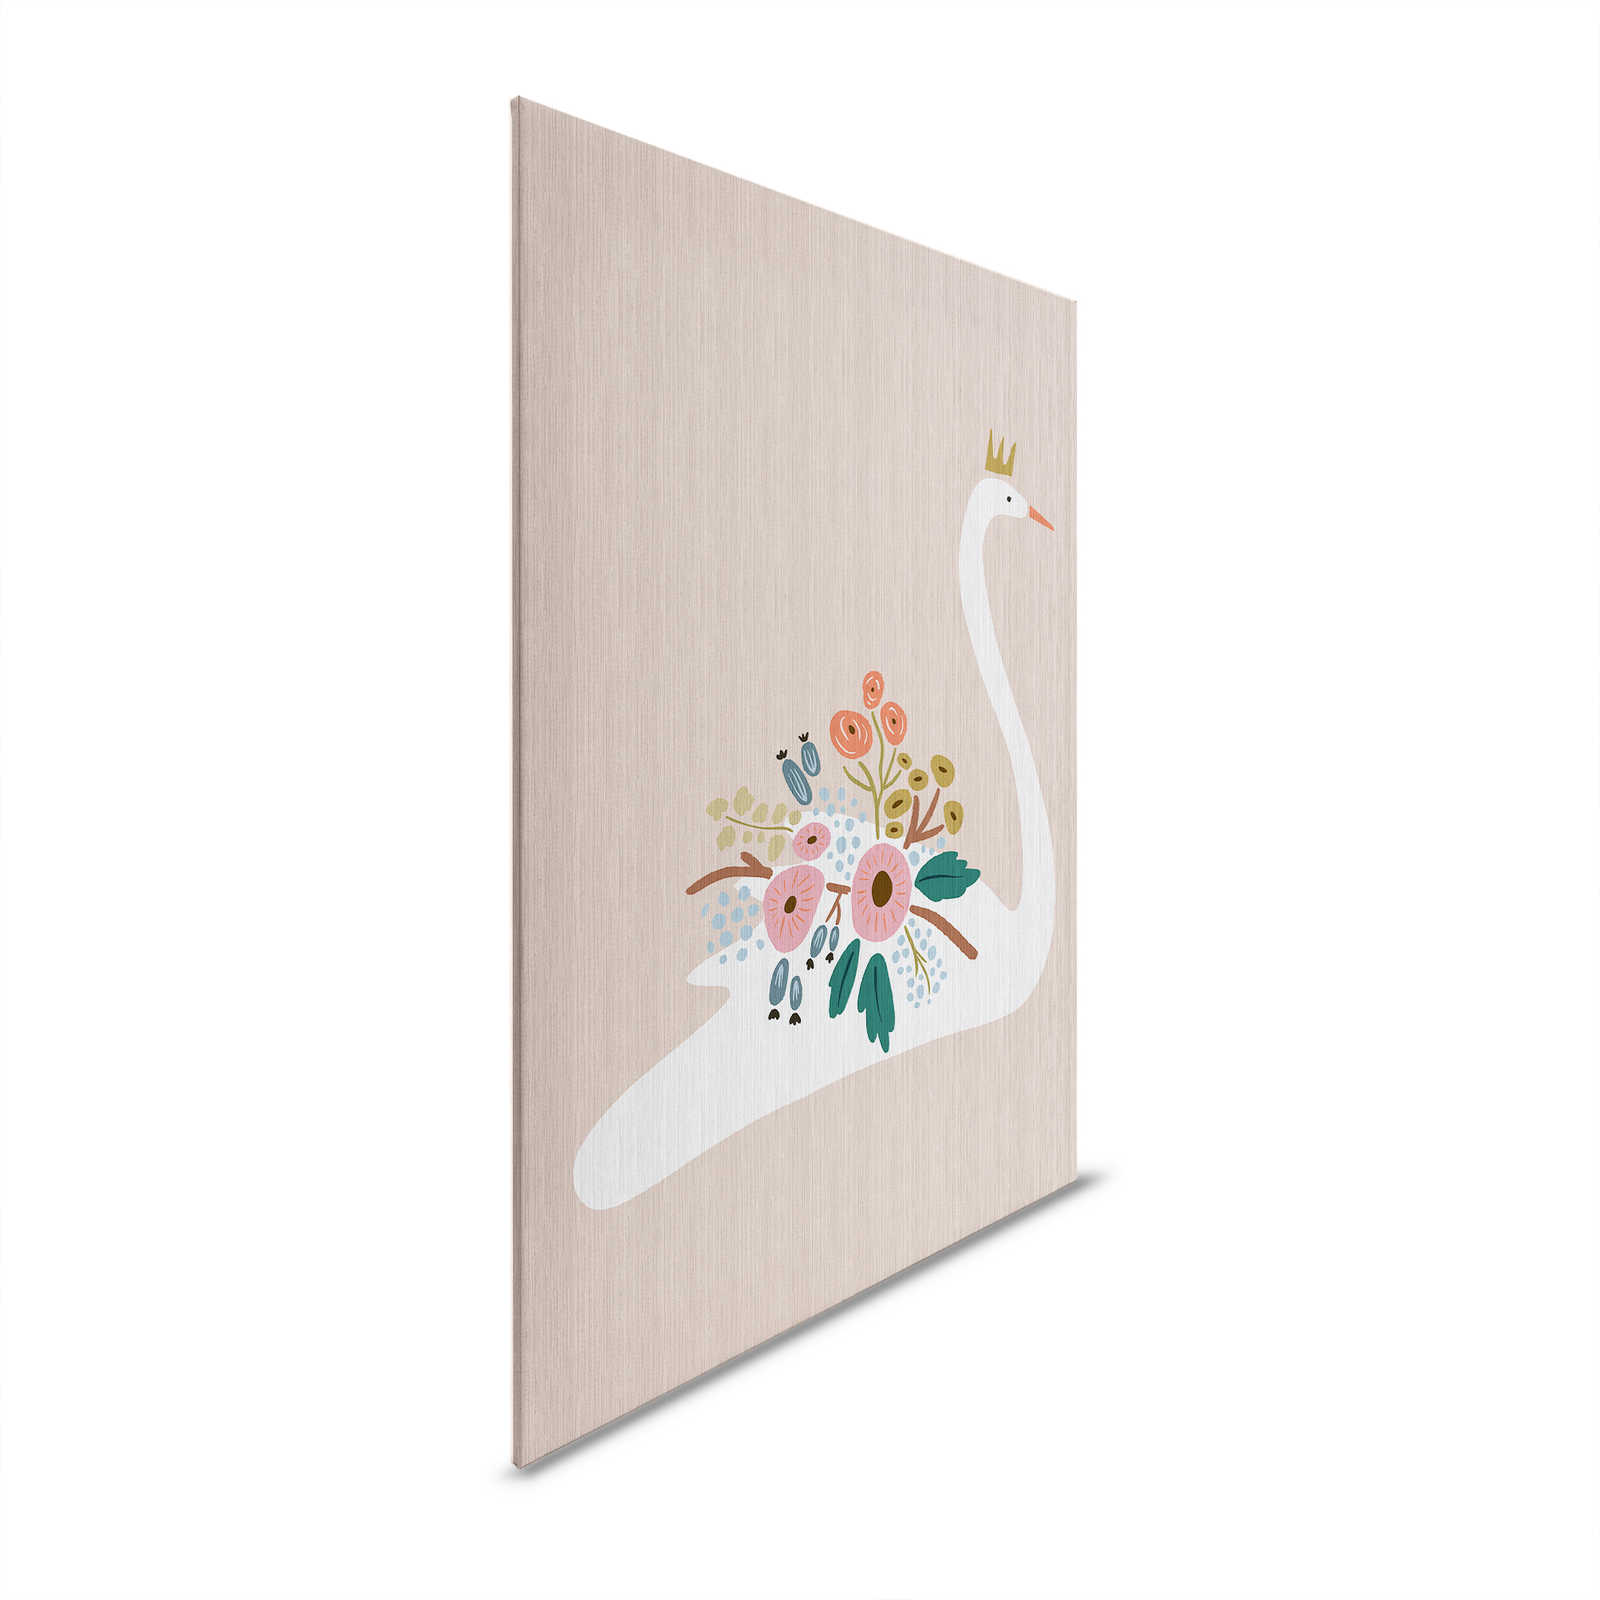 Up North 1 - Canvas painting Scandinavian Design Swan & Flowers - 1,20 m x 0,80 m
